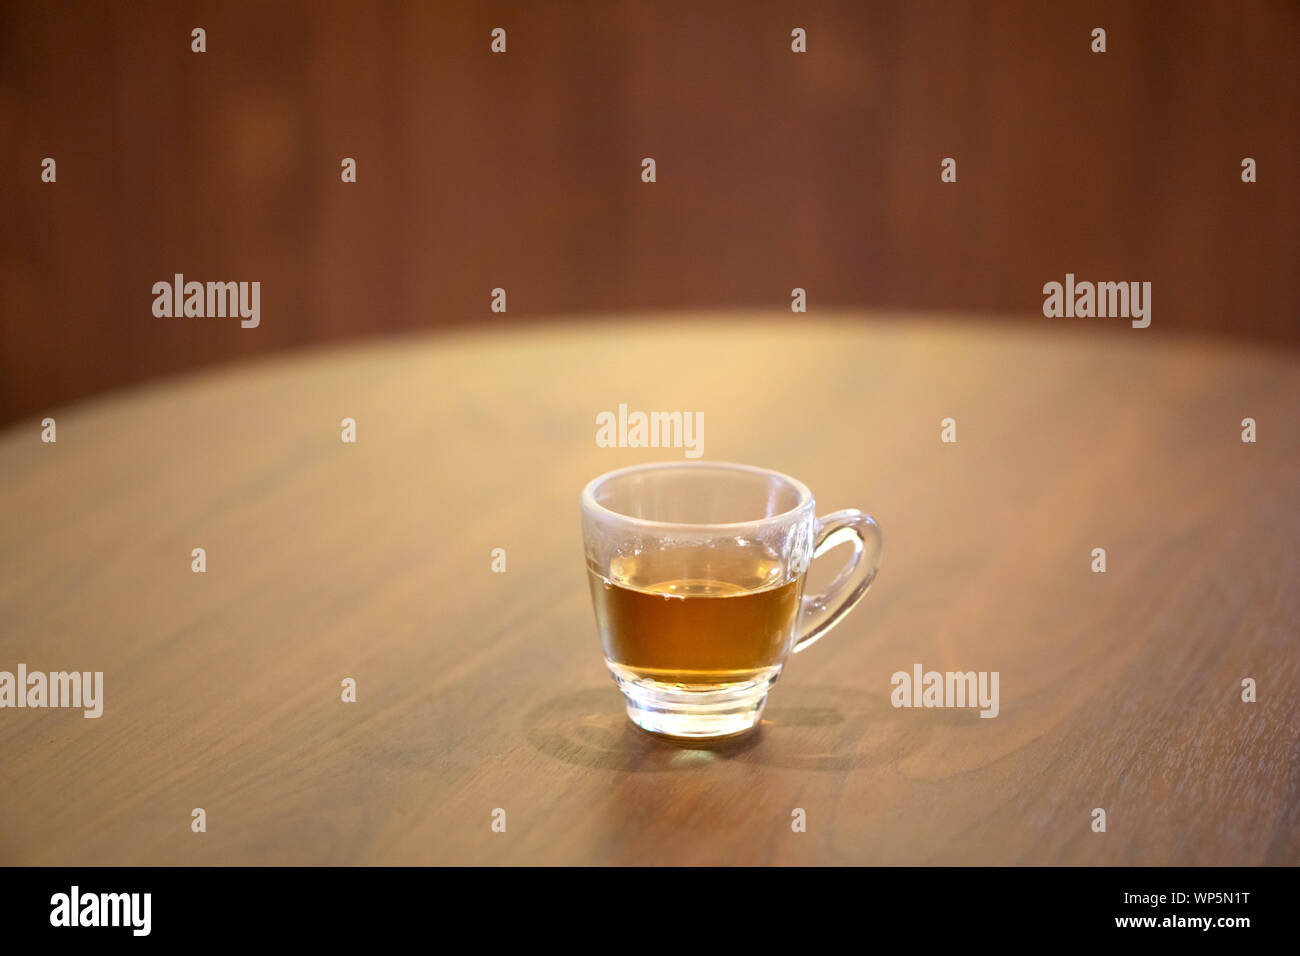 Cup of Lingzhi mushroom hot tea on wood table. Stock Photo